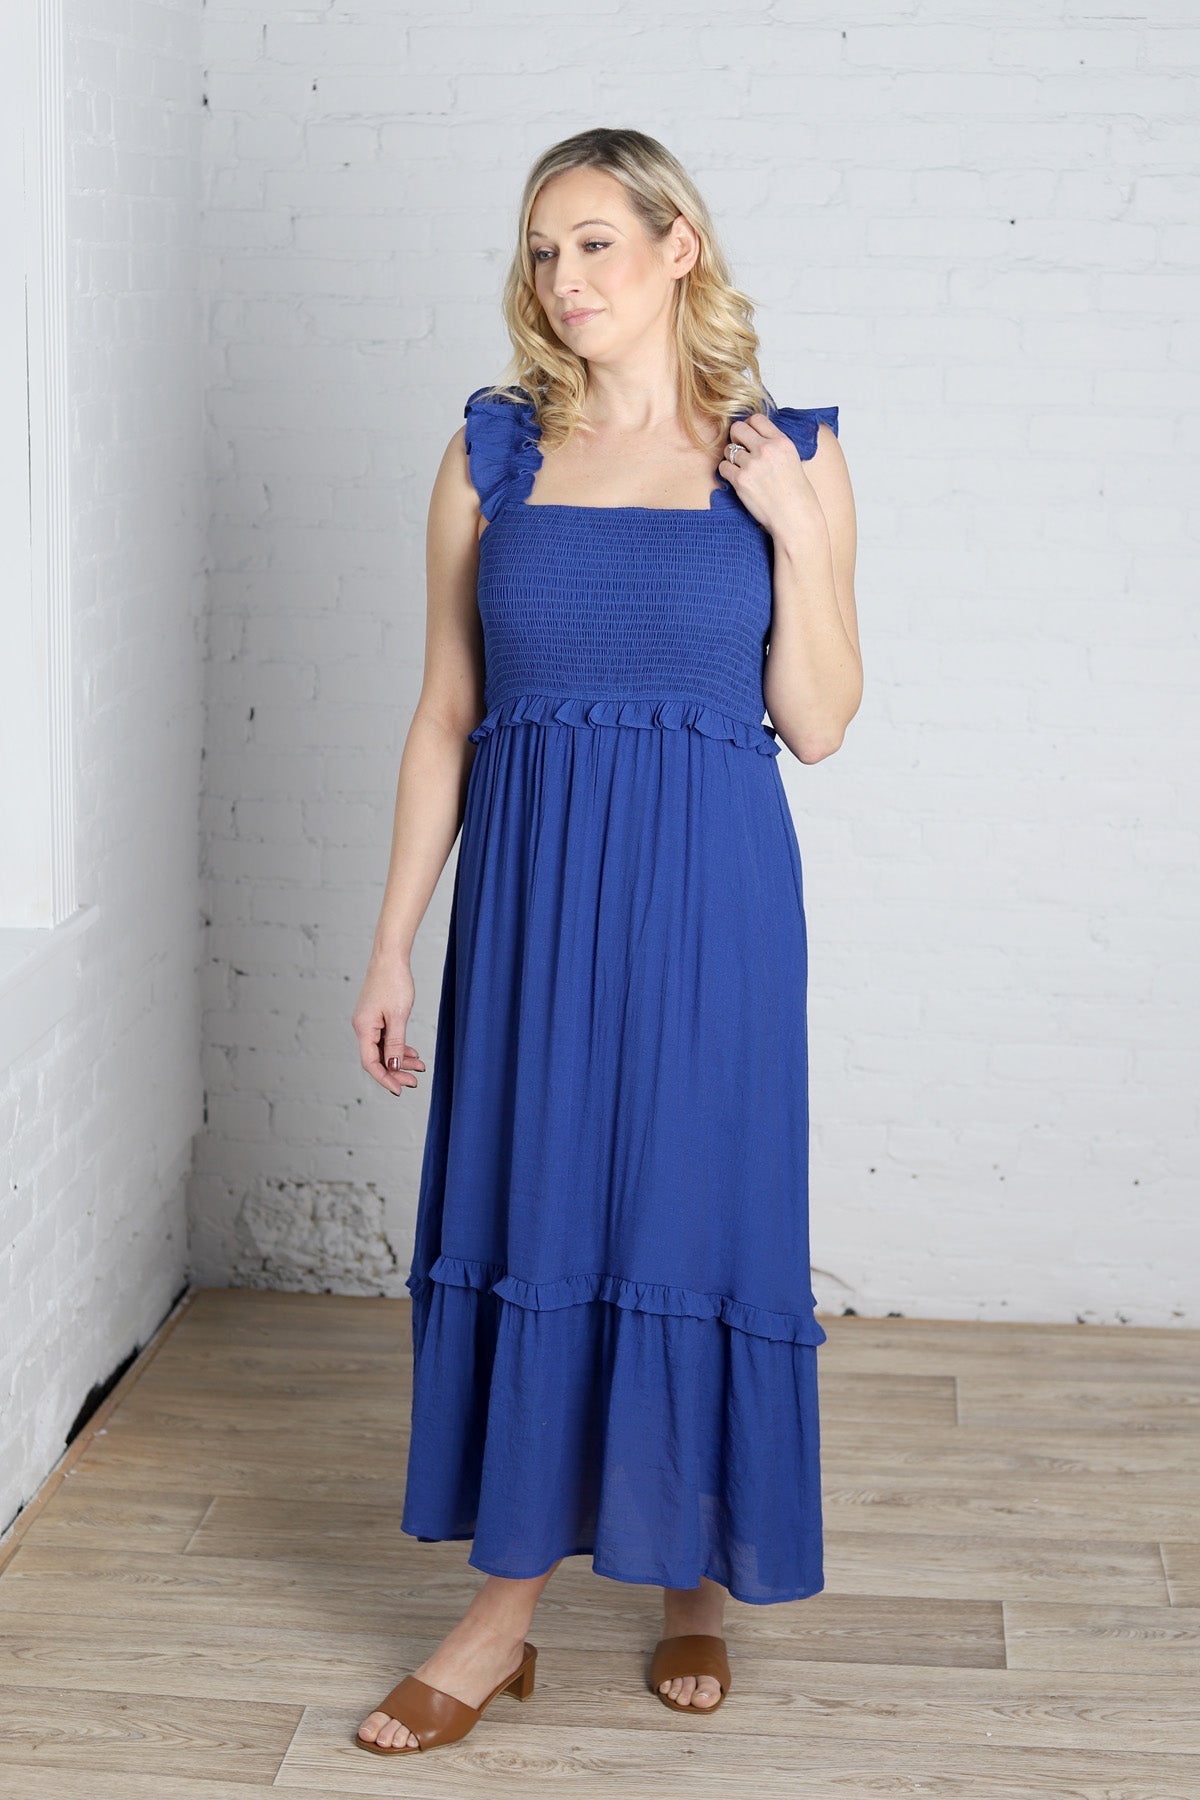 Bostyn Royal Blue Smocked Dress